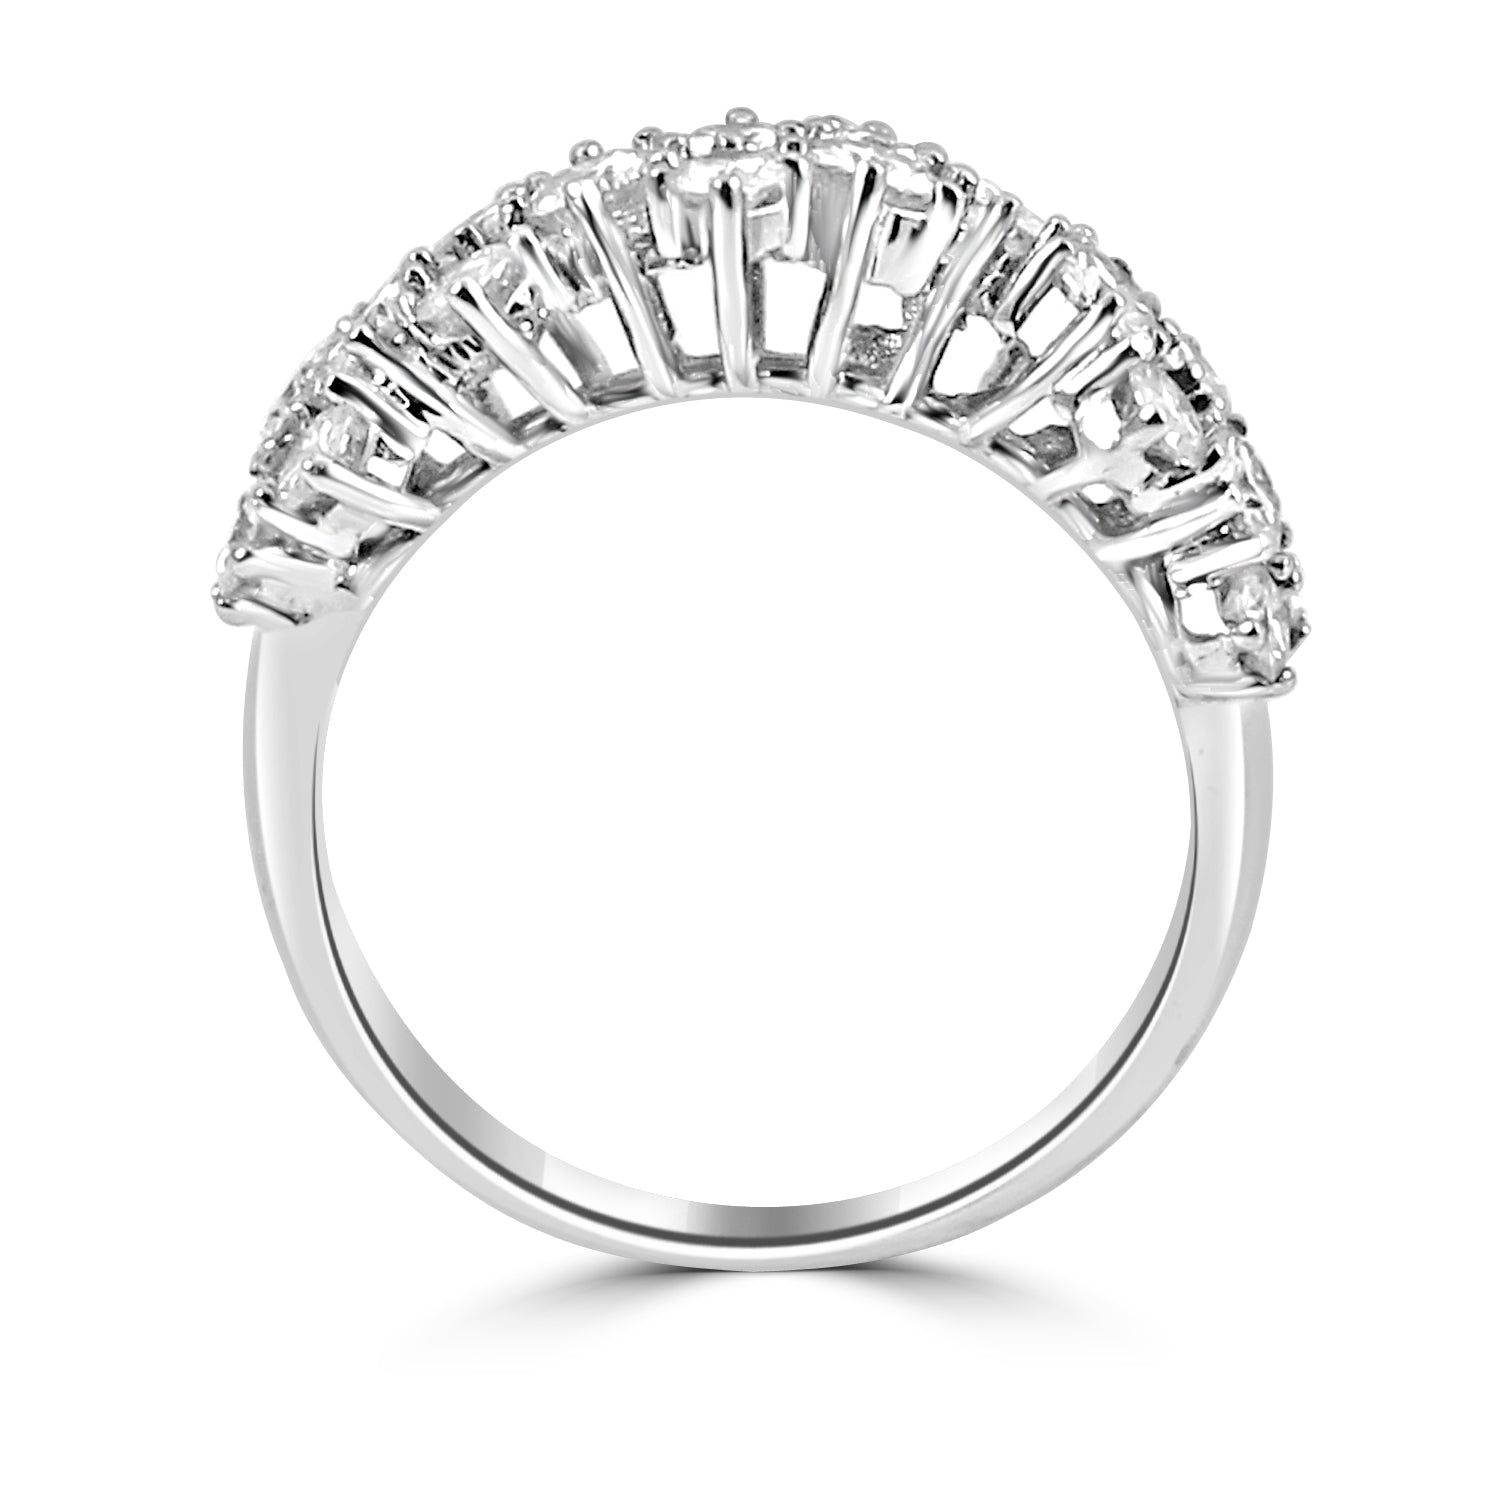 Prelude Diamond Ring